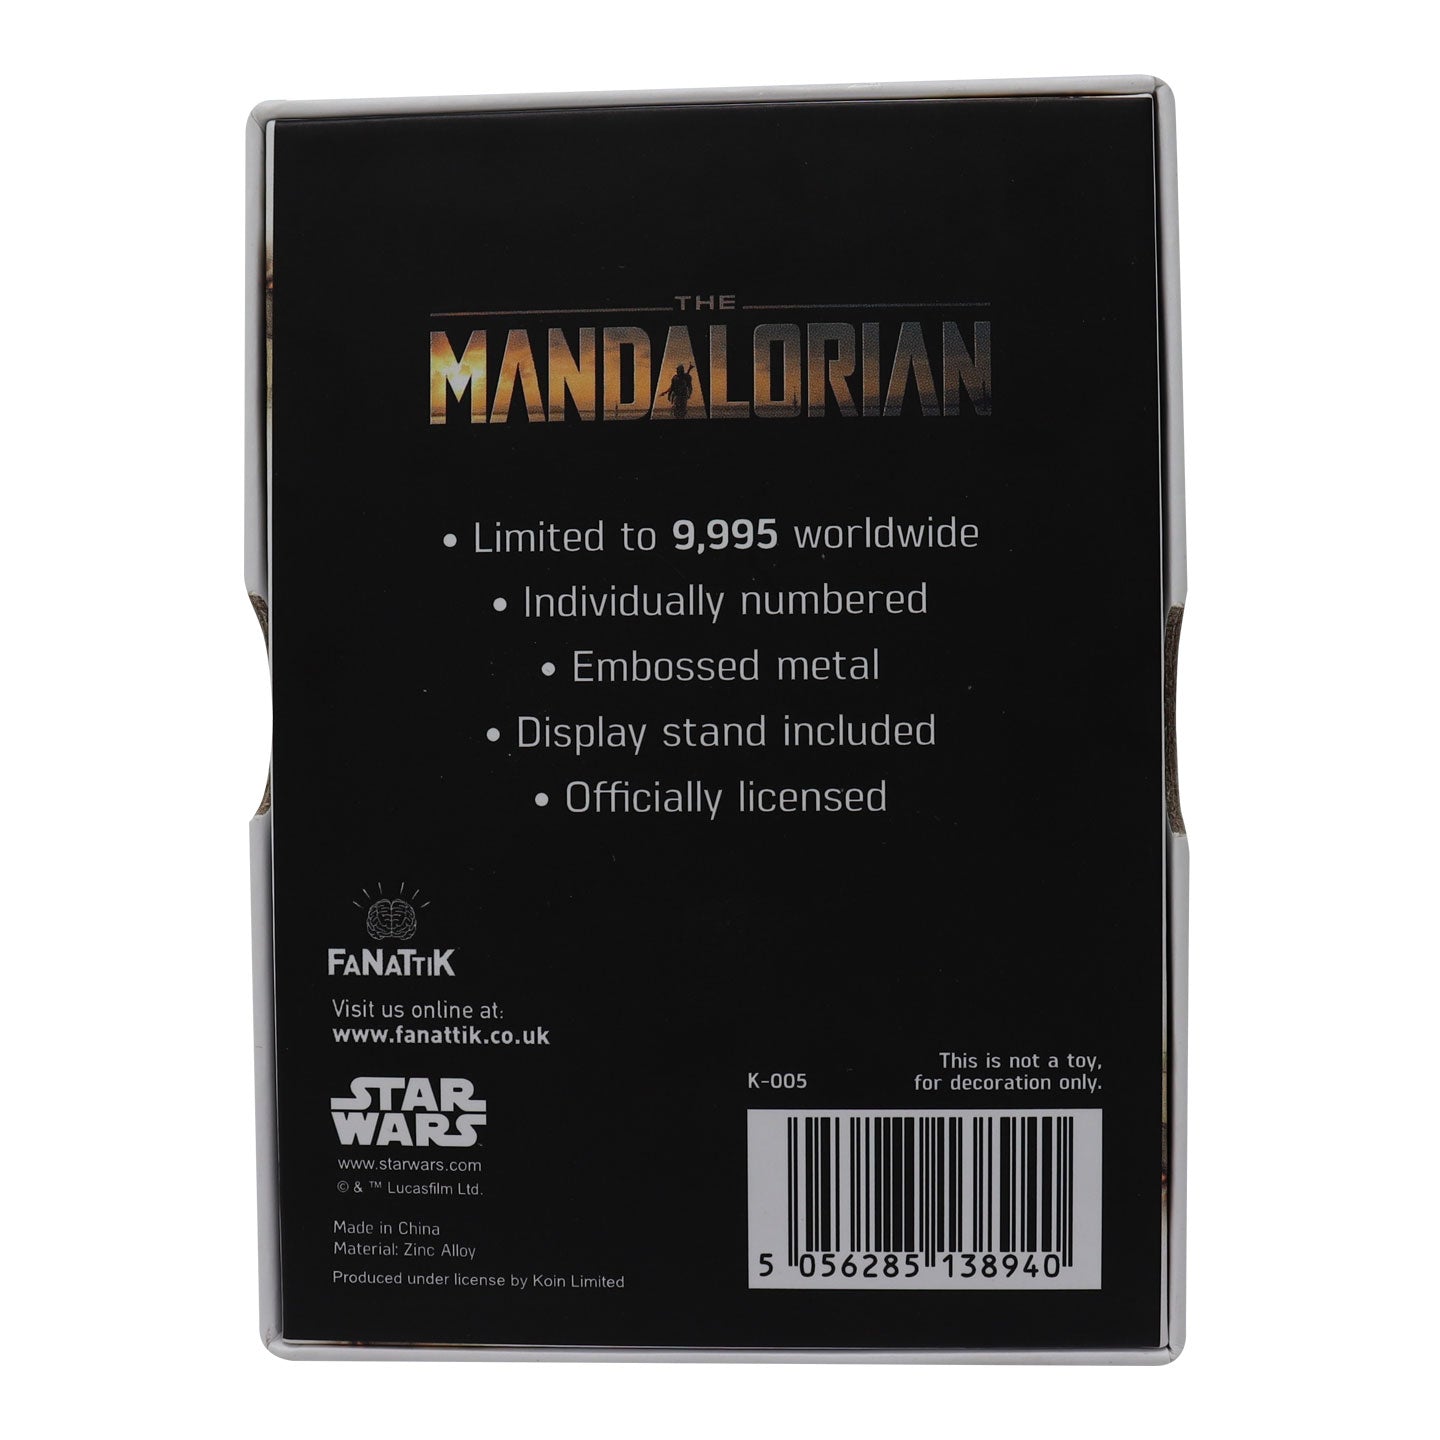 Star Wars Limited Edition The Mandalorian Ingot